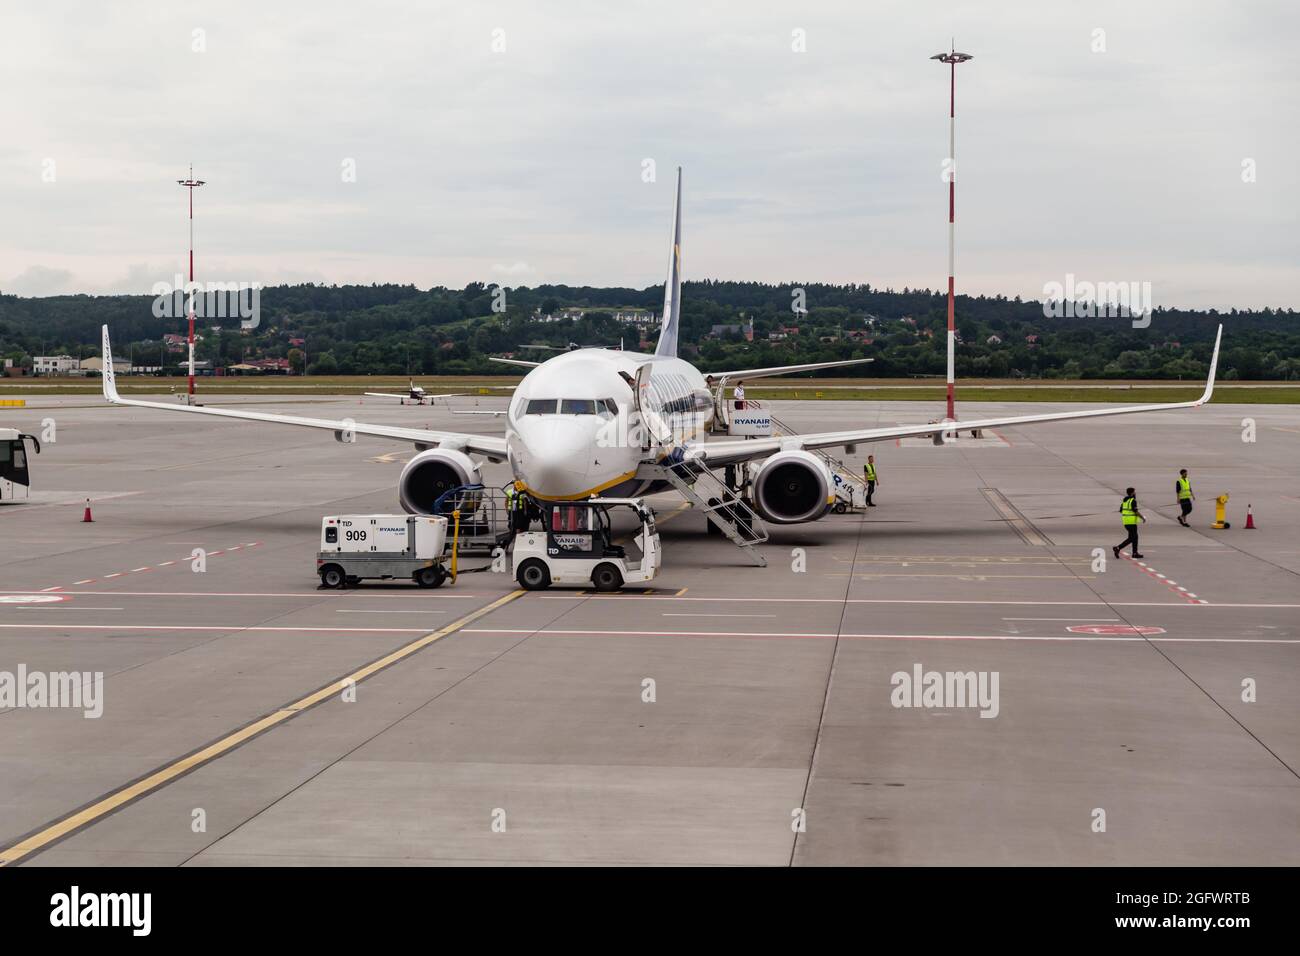 Ryanair Airlines Airbus A320 seen on the landing area.  Krakow John Paul II International Airport is an international airport located near Kraków, in Stock Photo